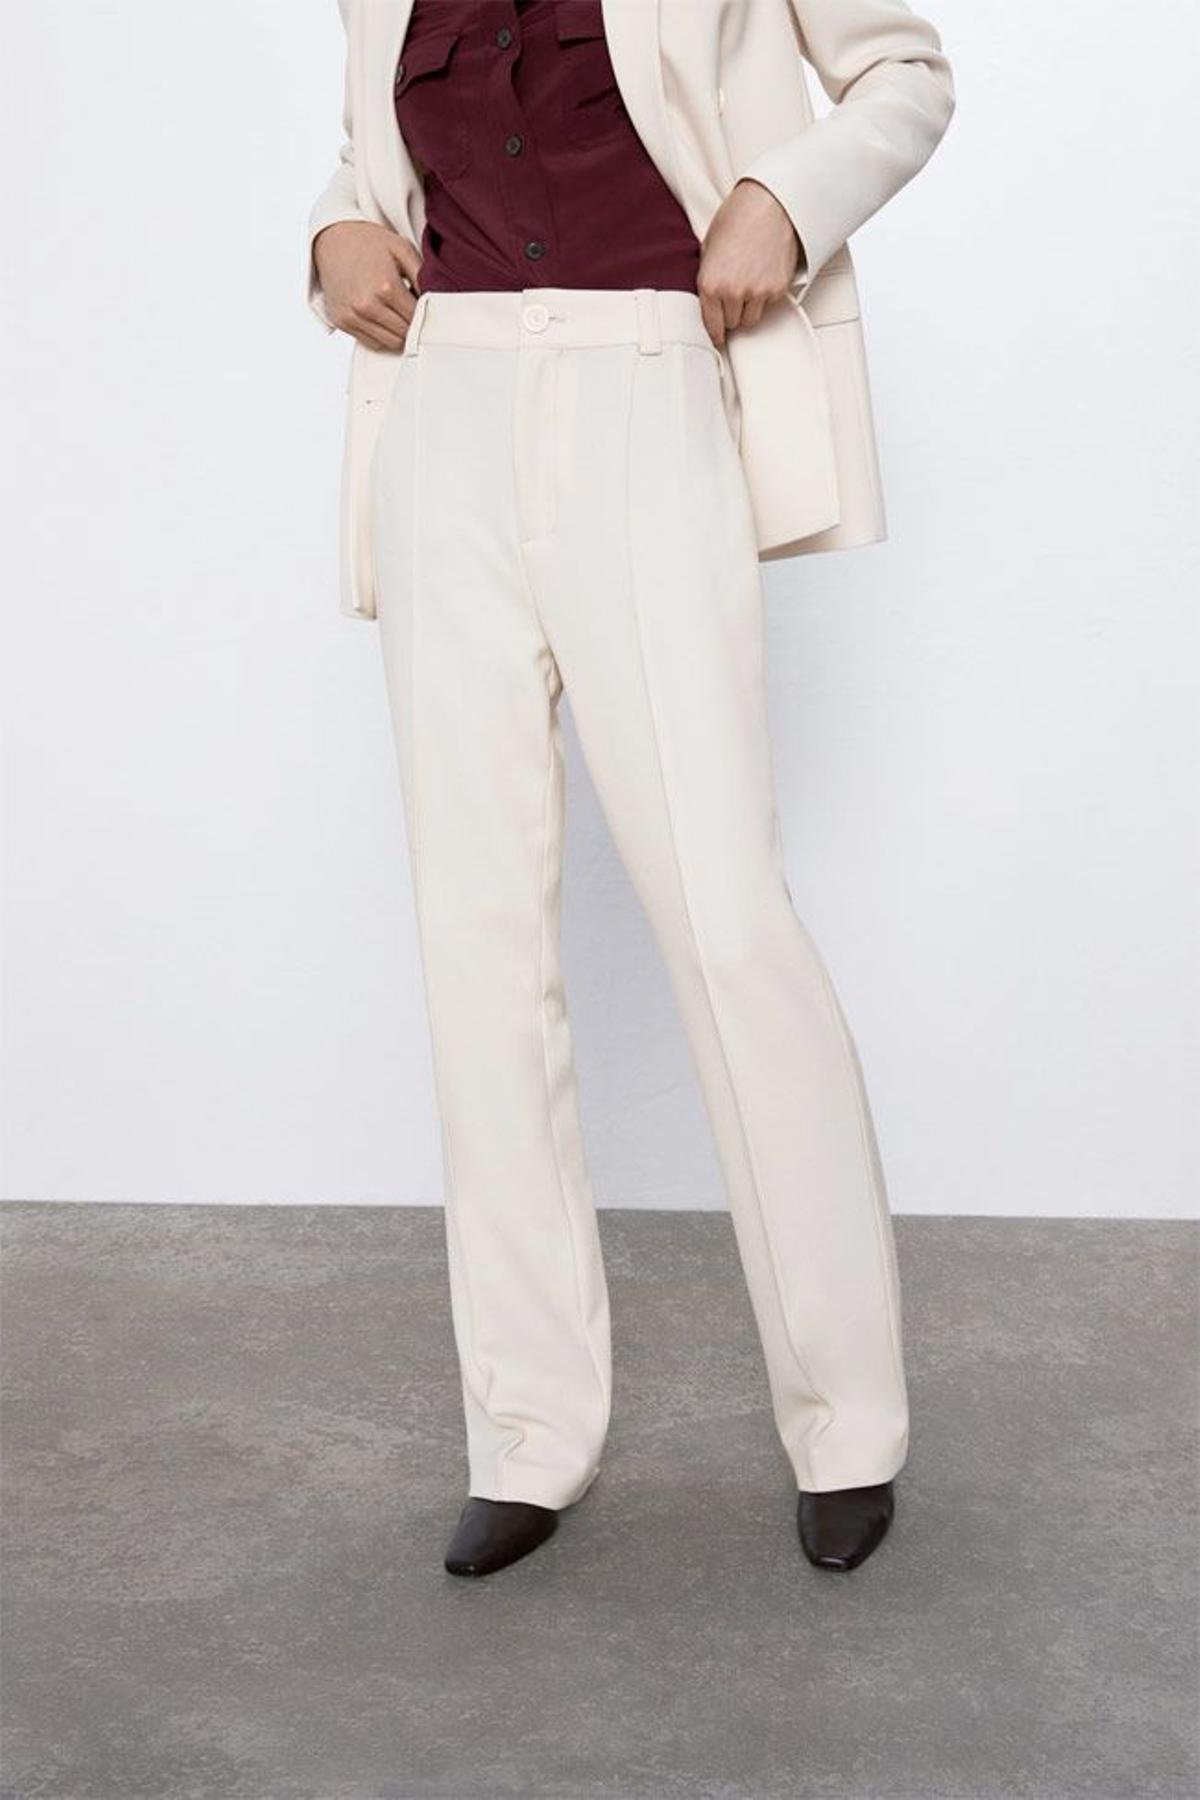 Pantalón blanco con costura delantera, de Zara